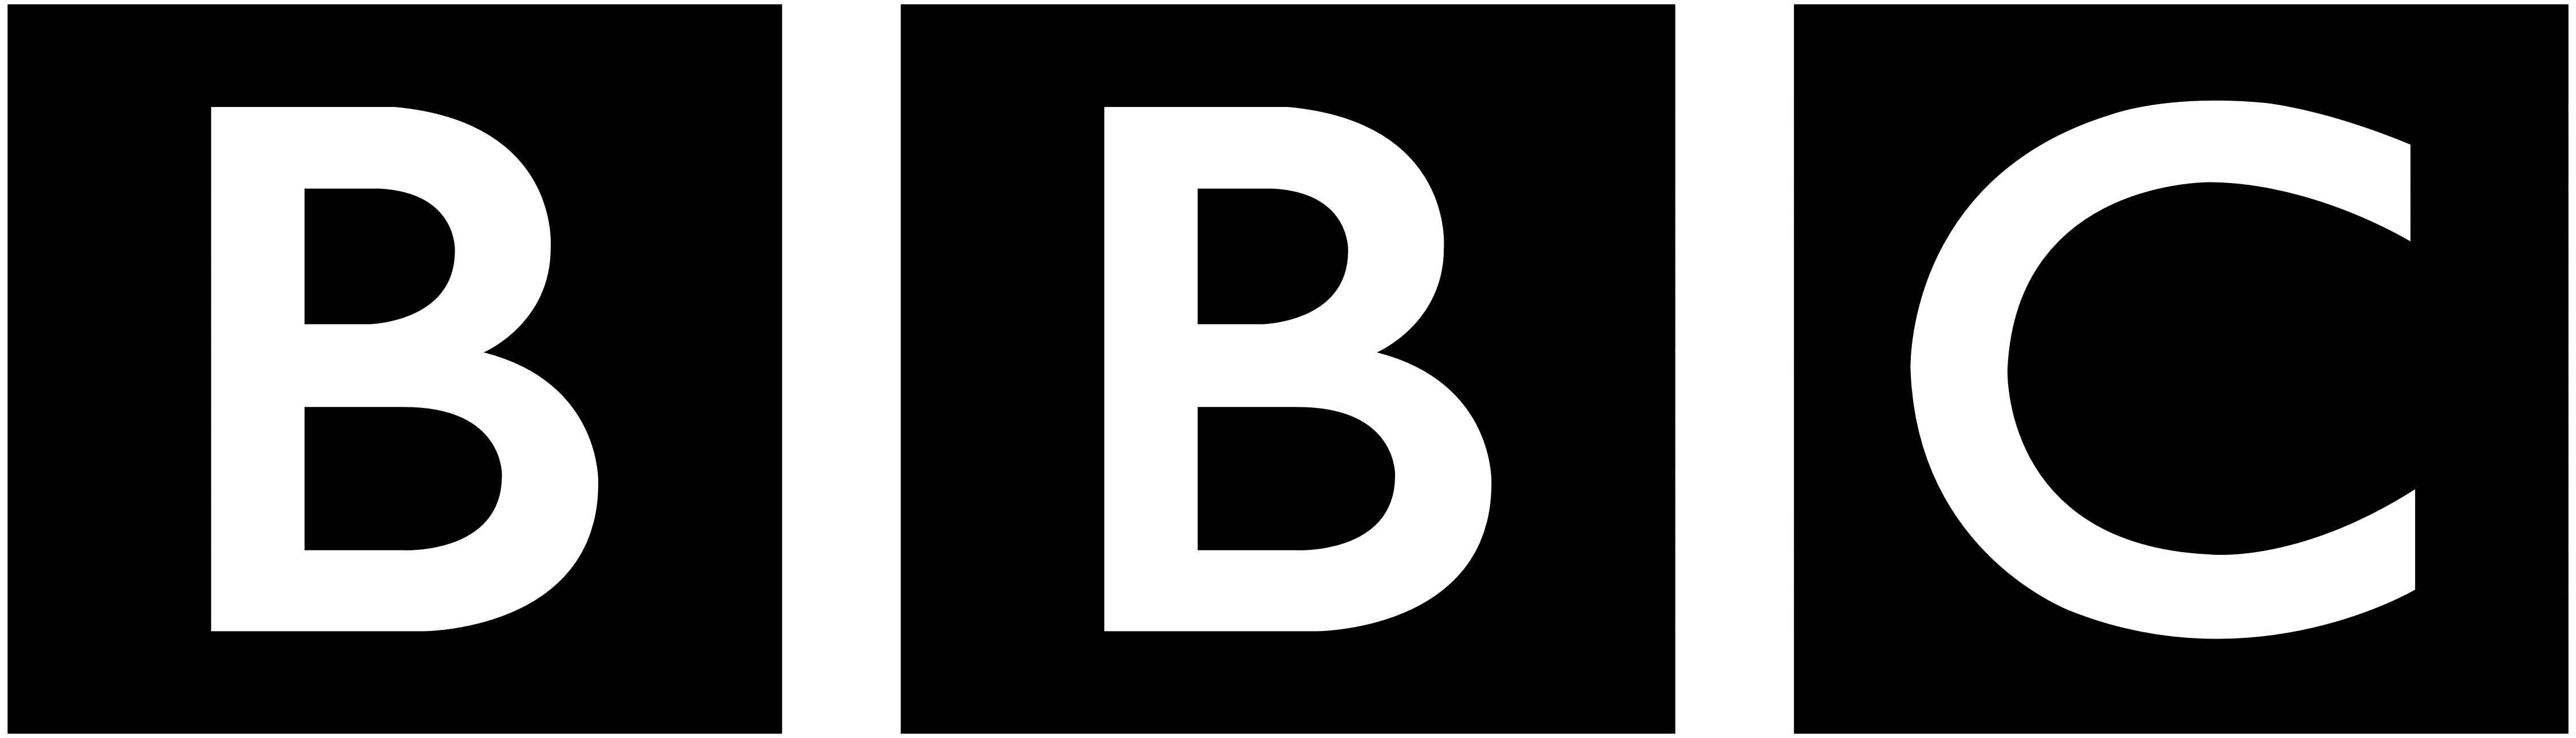 bbc-logo-png-bbc-logos-img-4500x1290